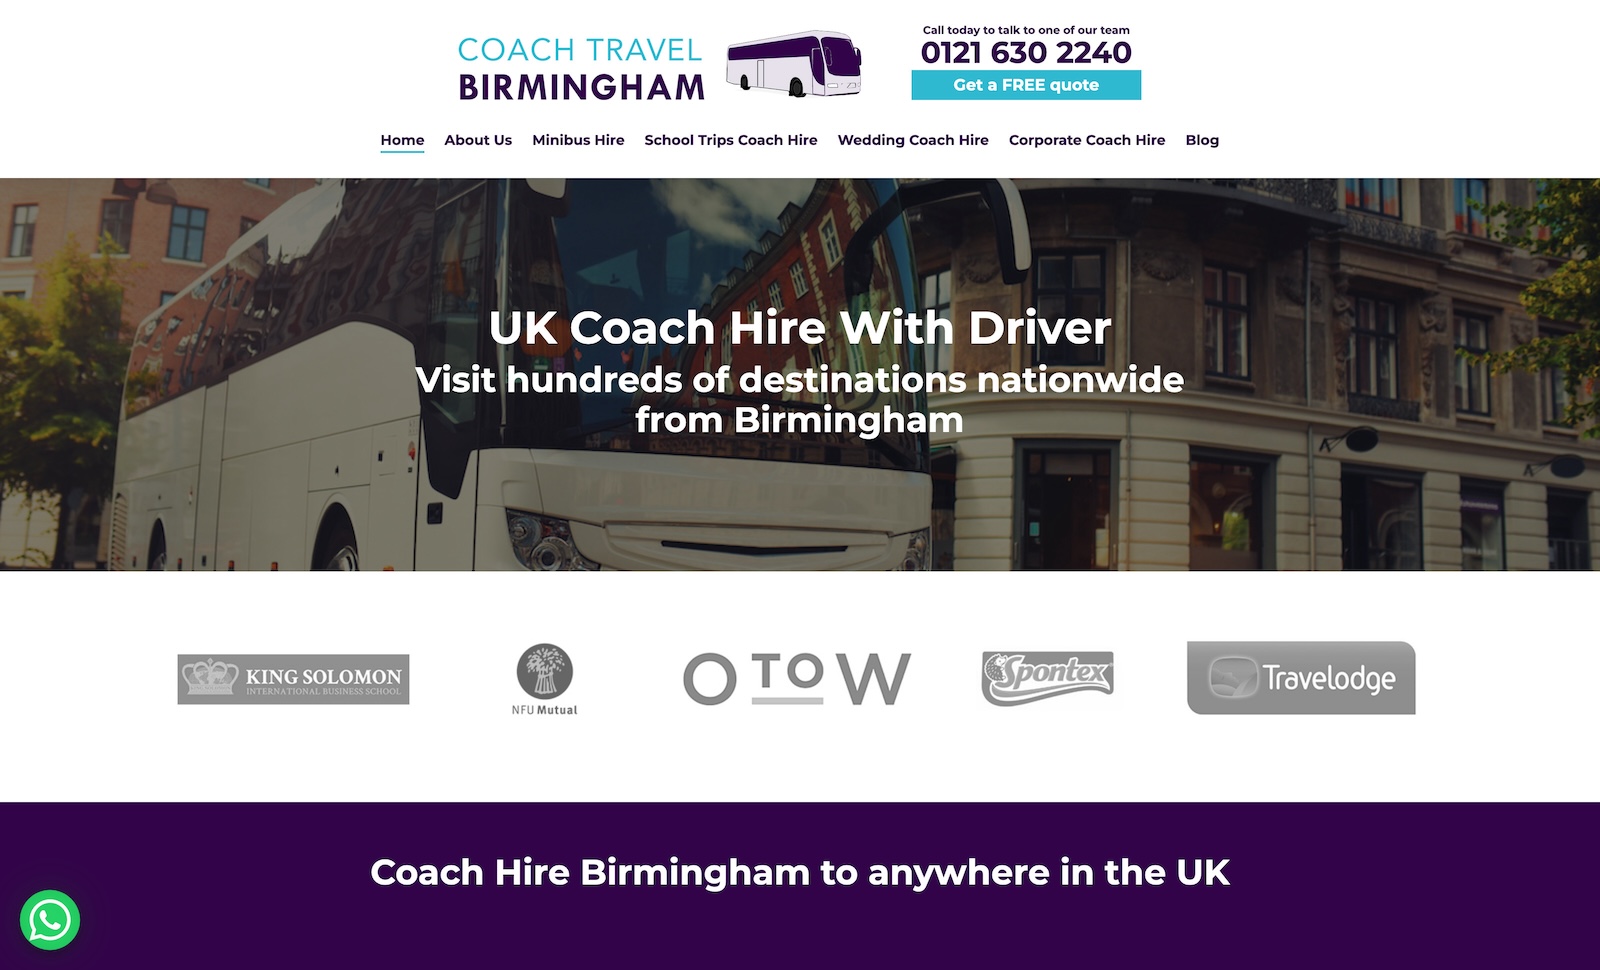 Coach Travel Birmingham